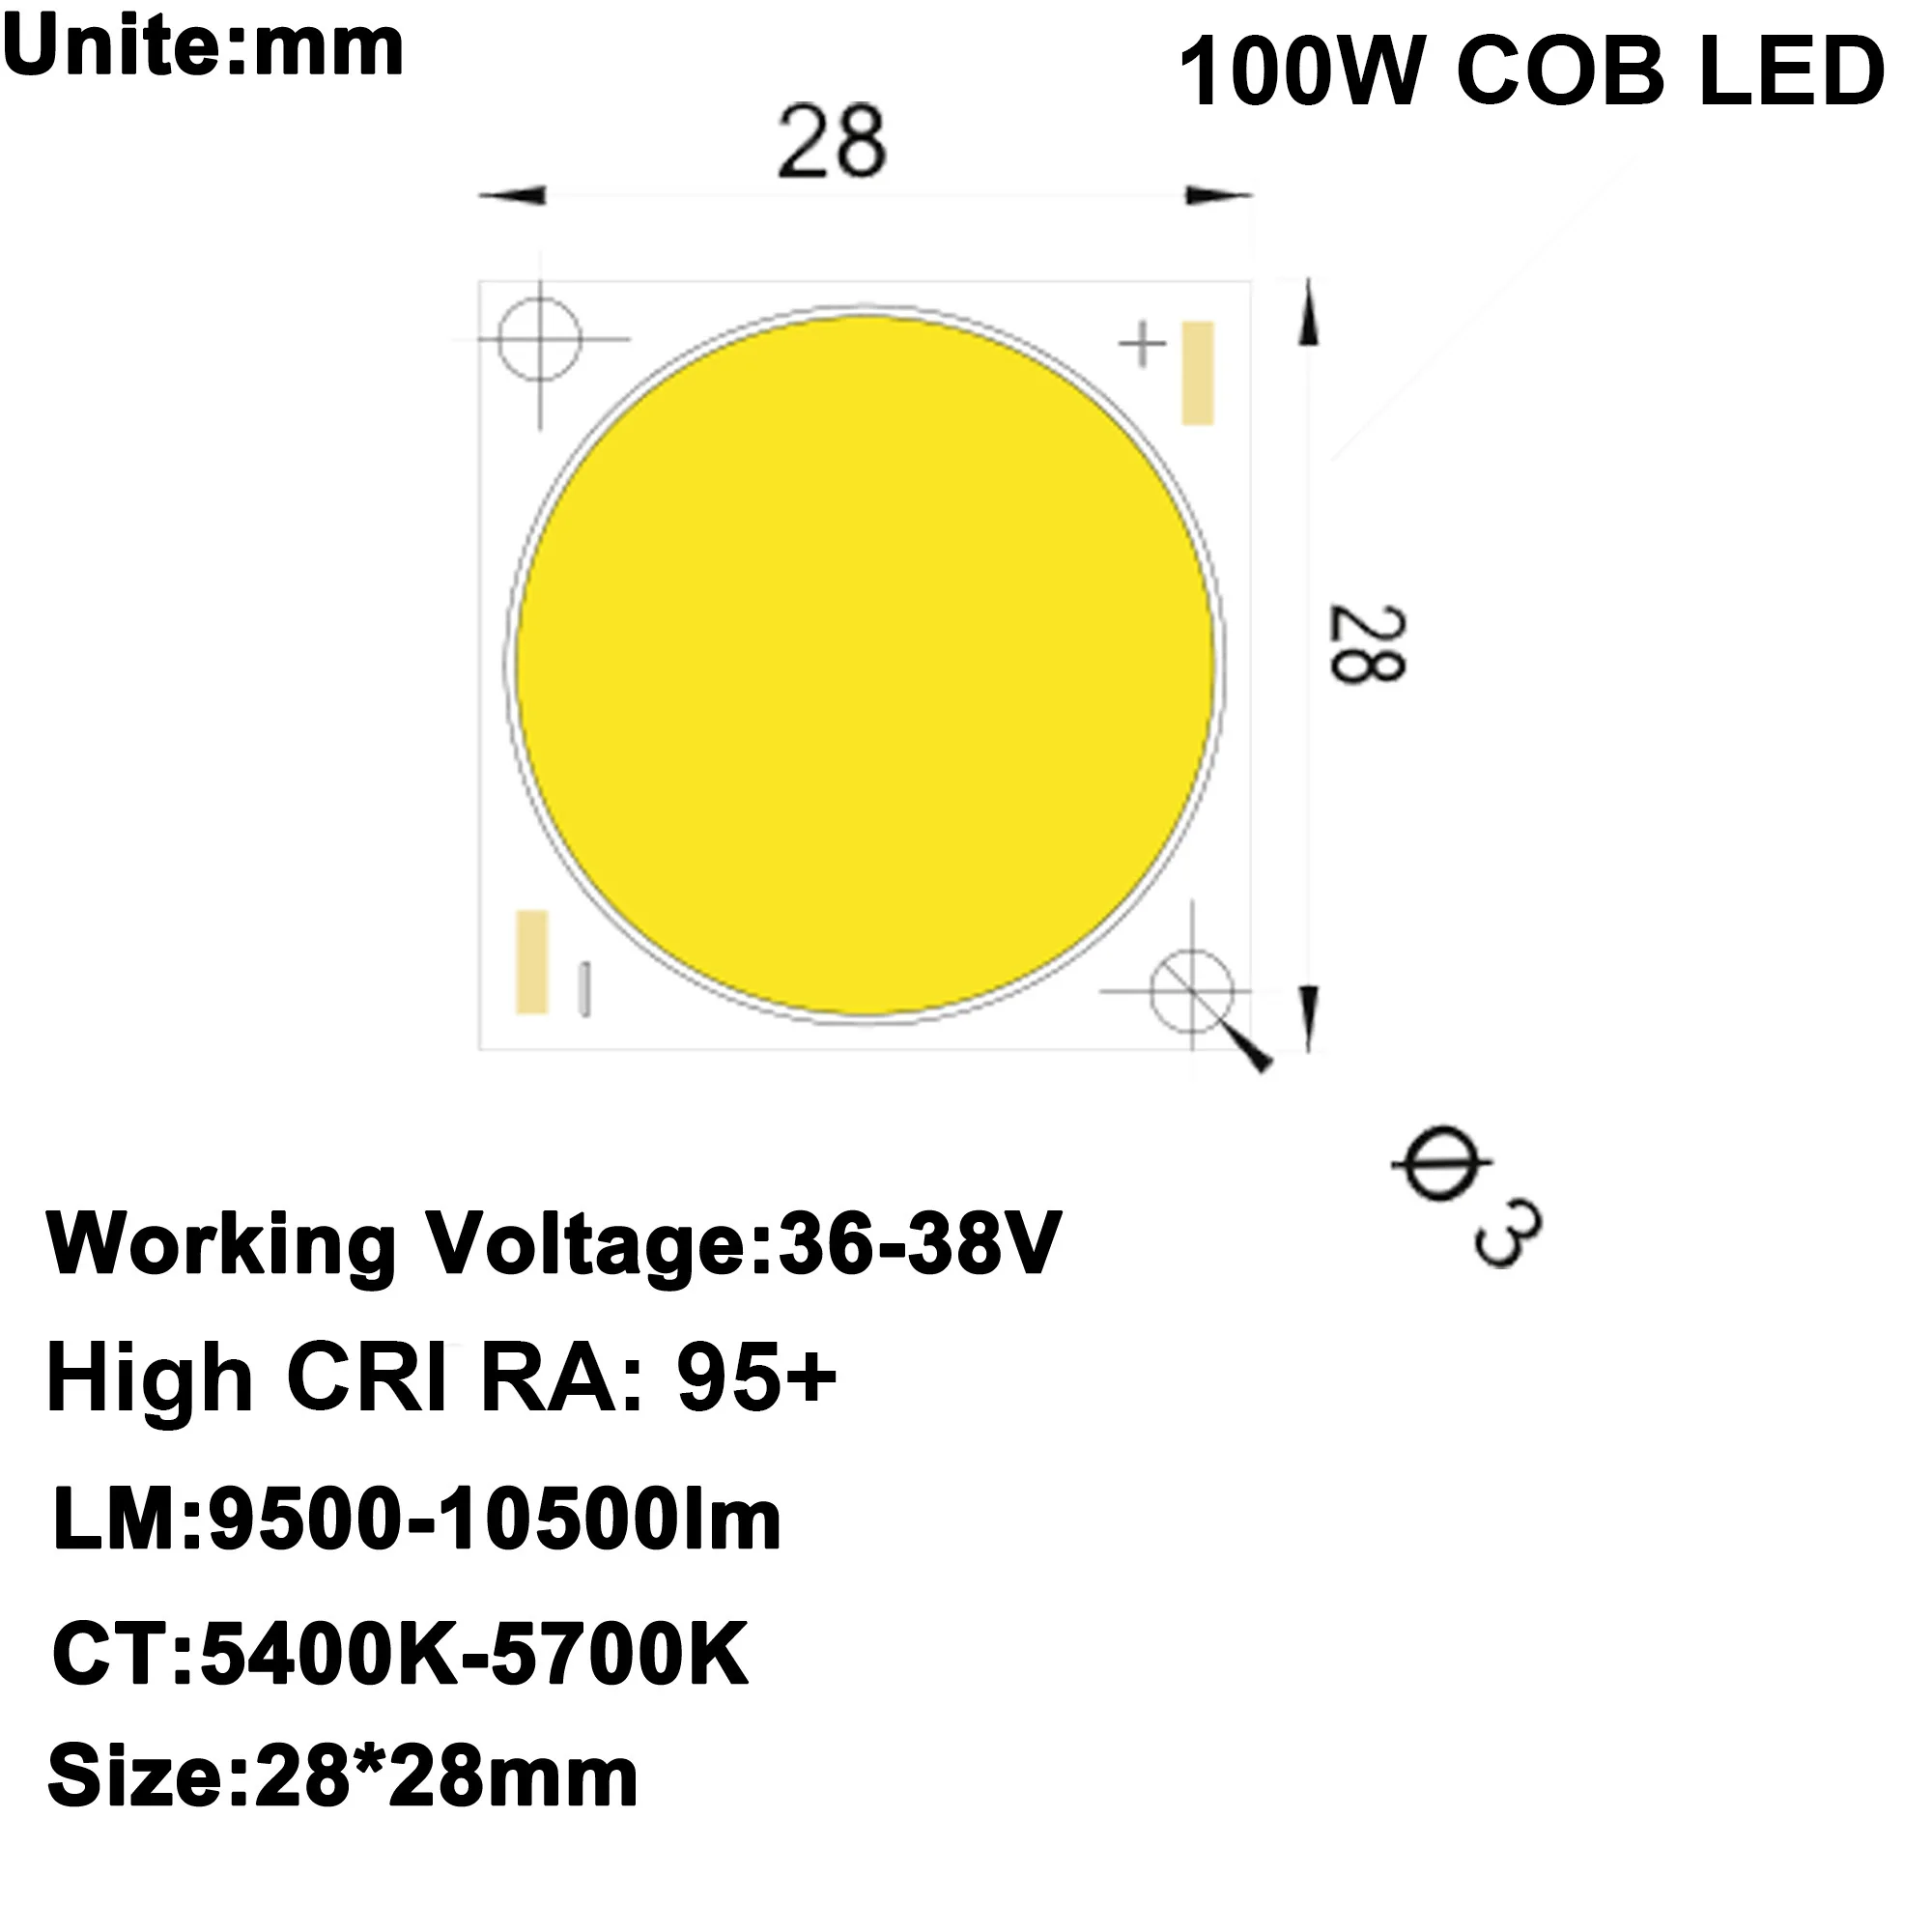 DIY LED U-HOME High CRI 95+ COB LED Daylight White DC34-36V 2.7A 100W 10000LM for DIY FLash Light/DIY Home Cinema Projector